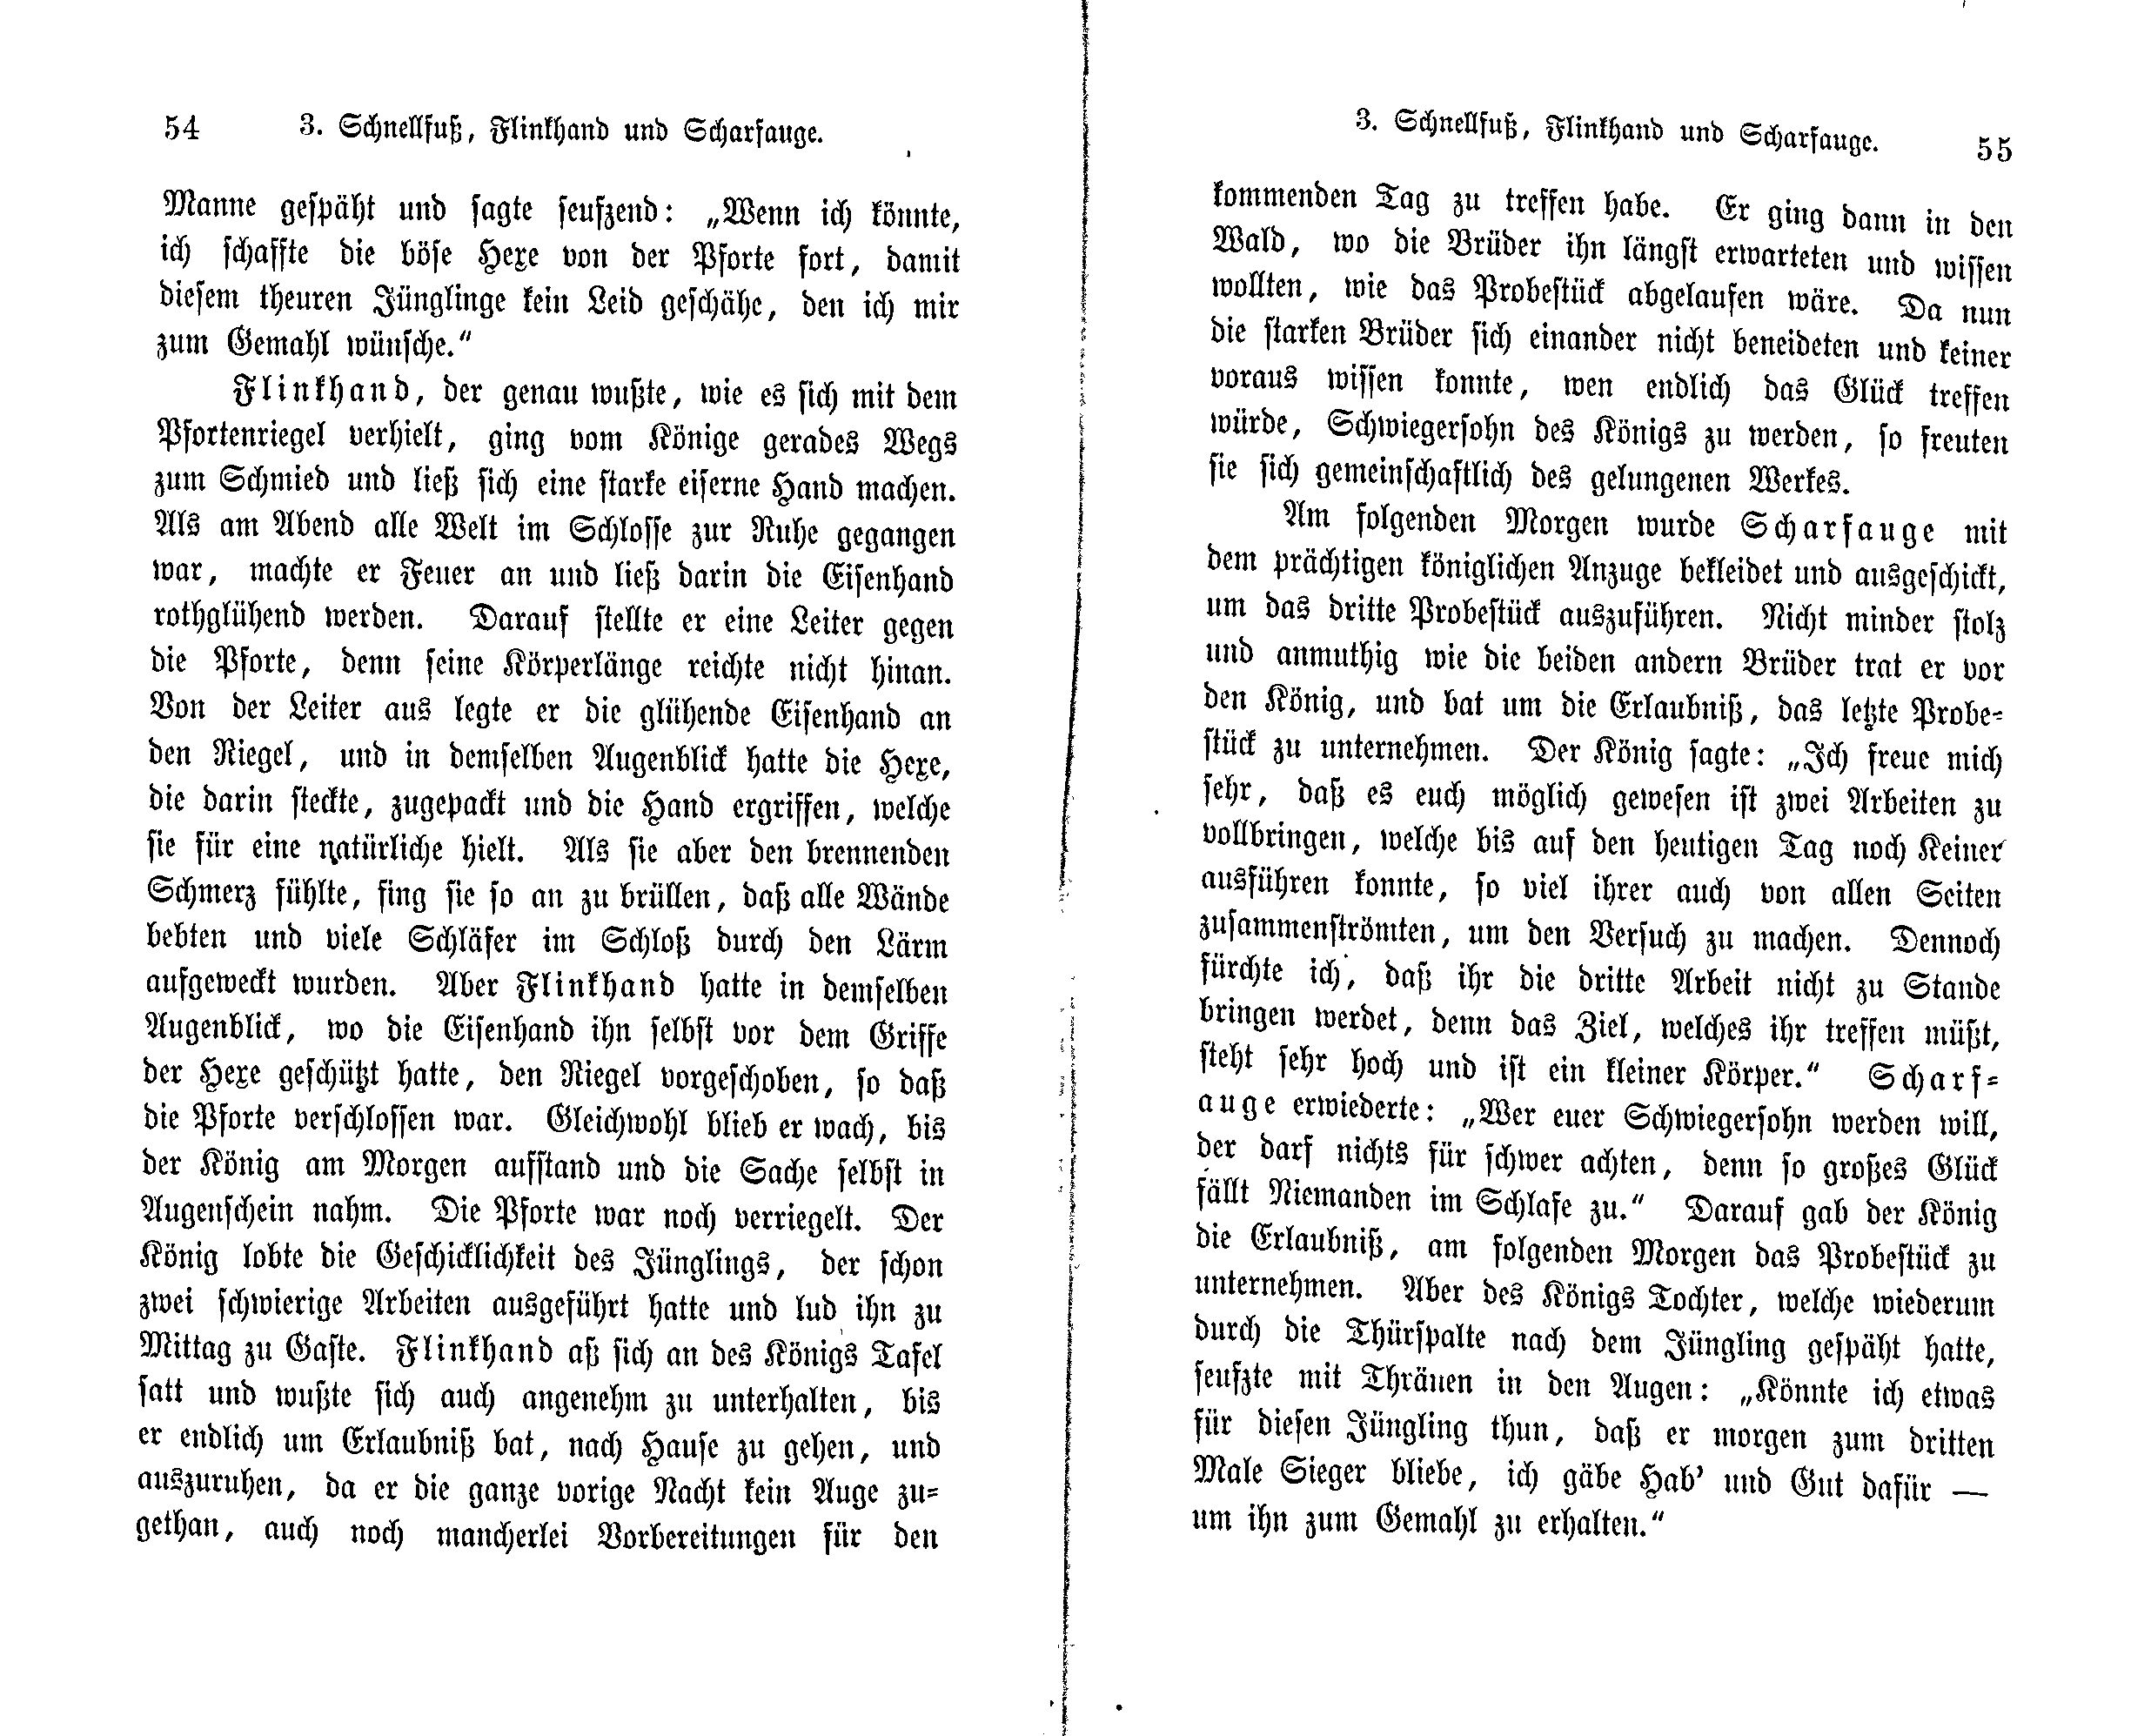 Estnische Märchen [1] (1869) | 32. (54-55) Main body of text